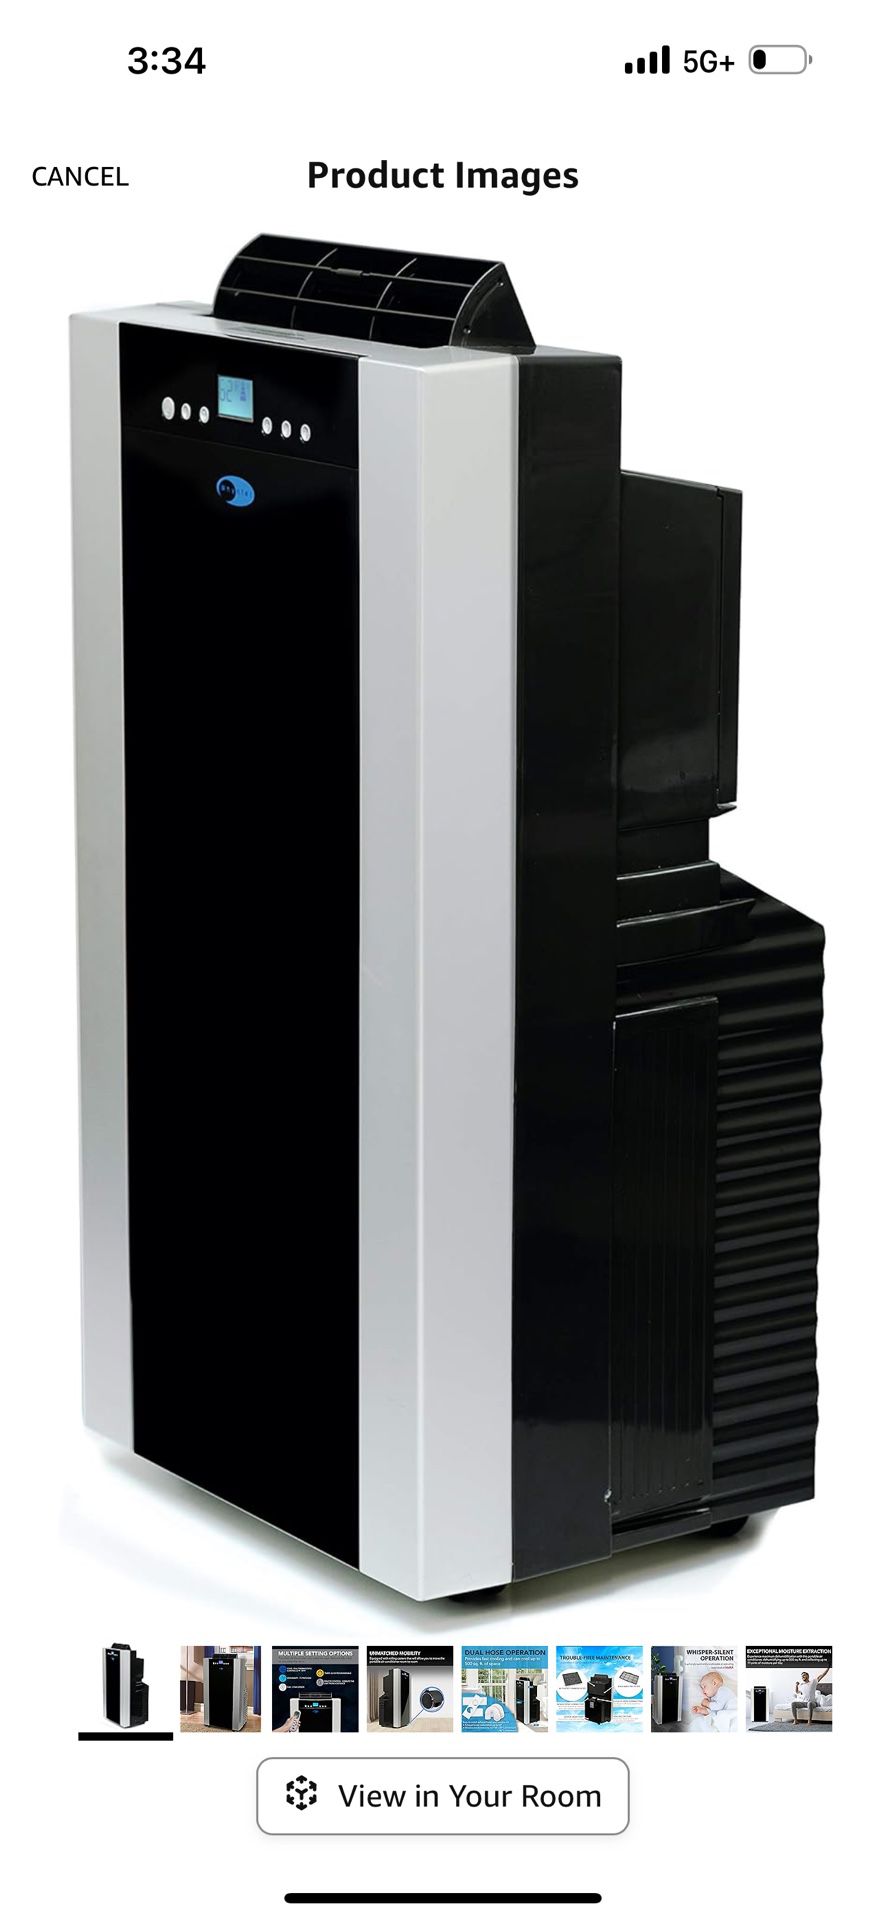 Whynter 14,000 BTU Portable Air Conditioner